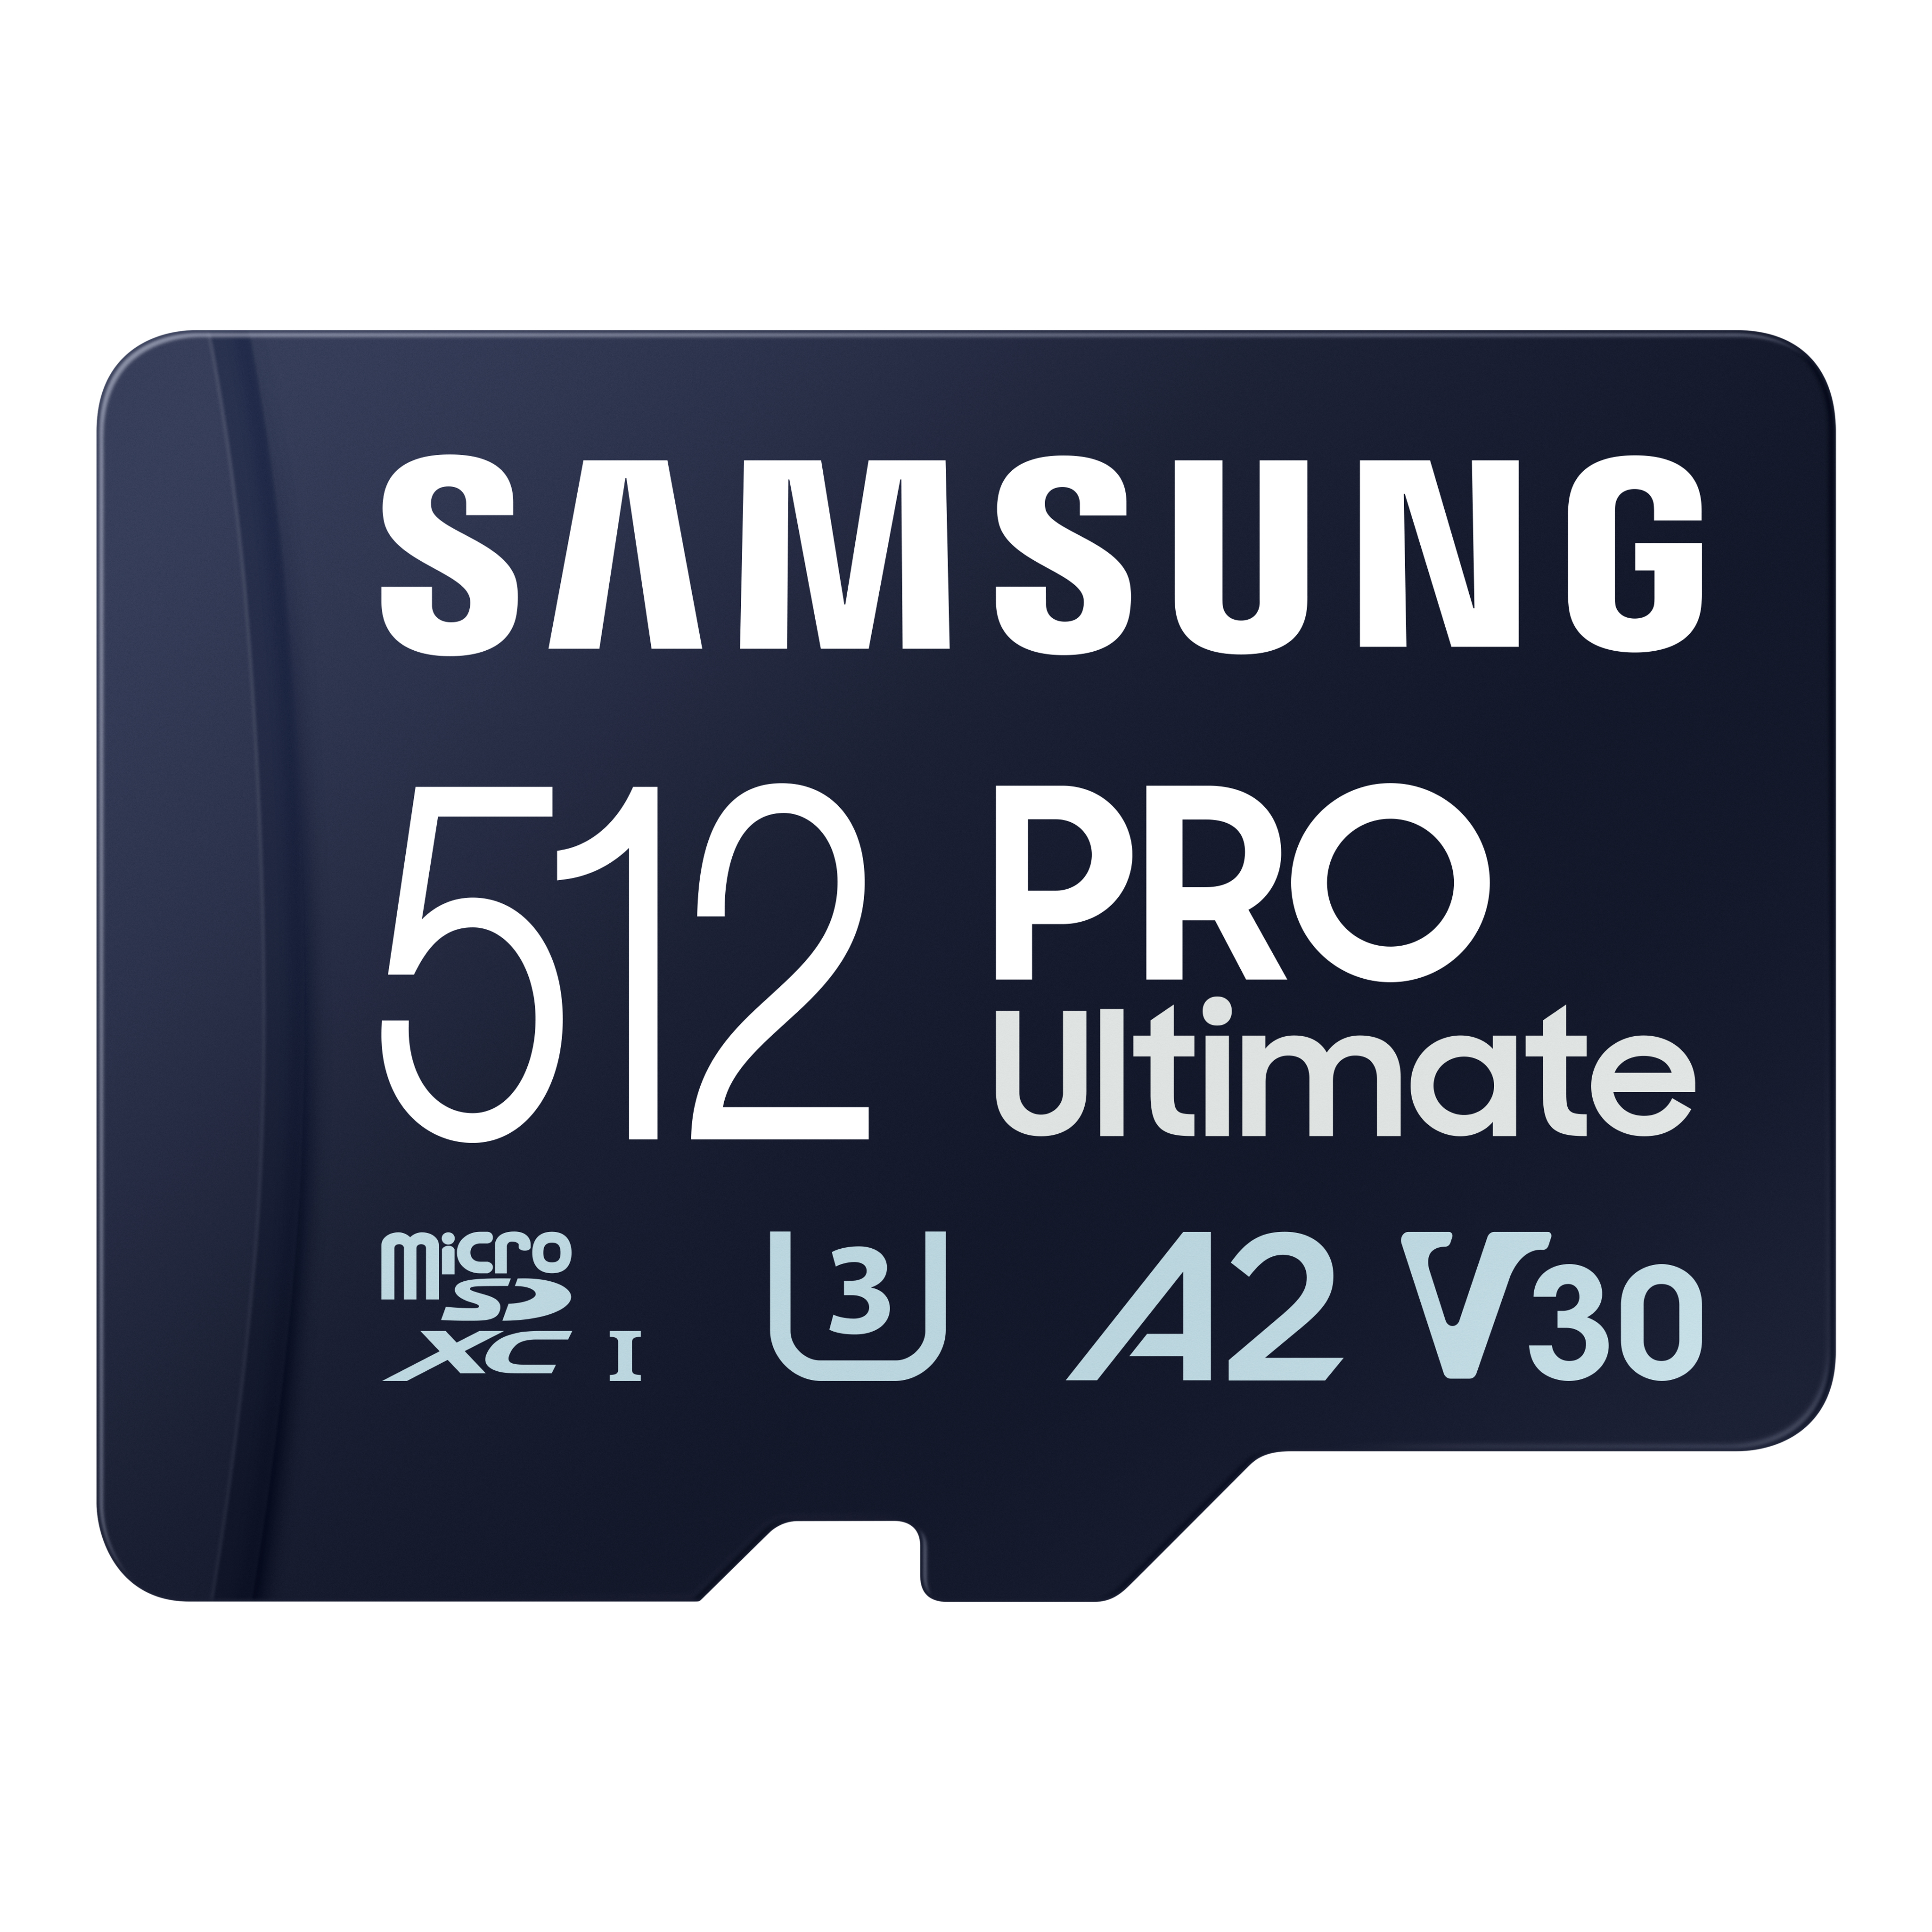 Samsung microSD PRO Ultimate  (512GB)